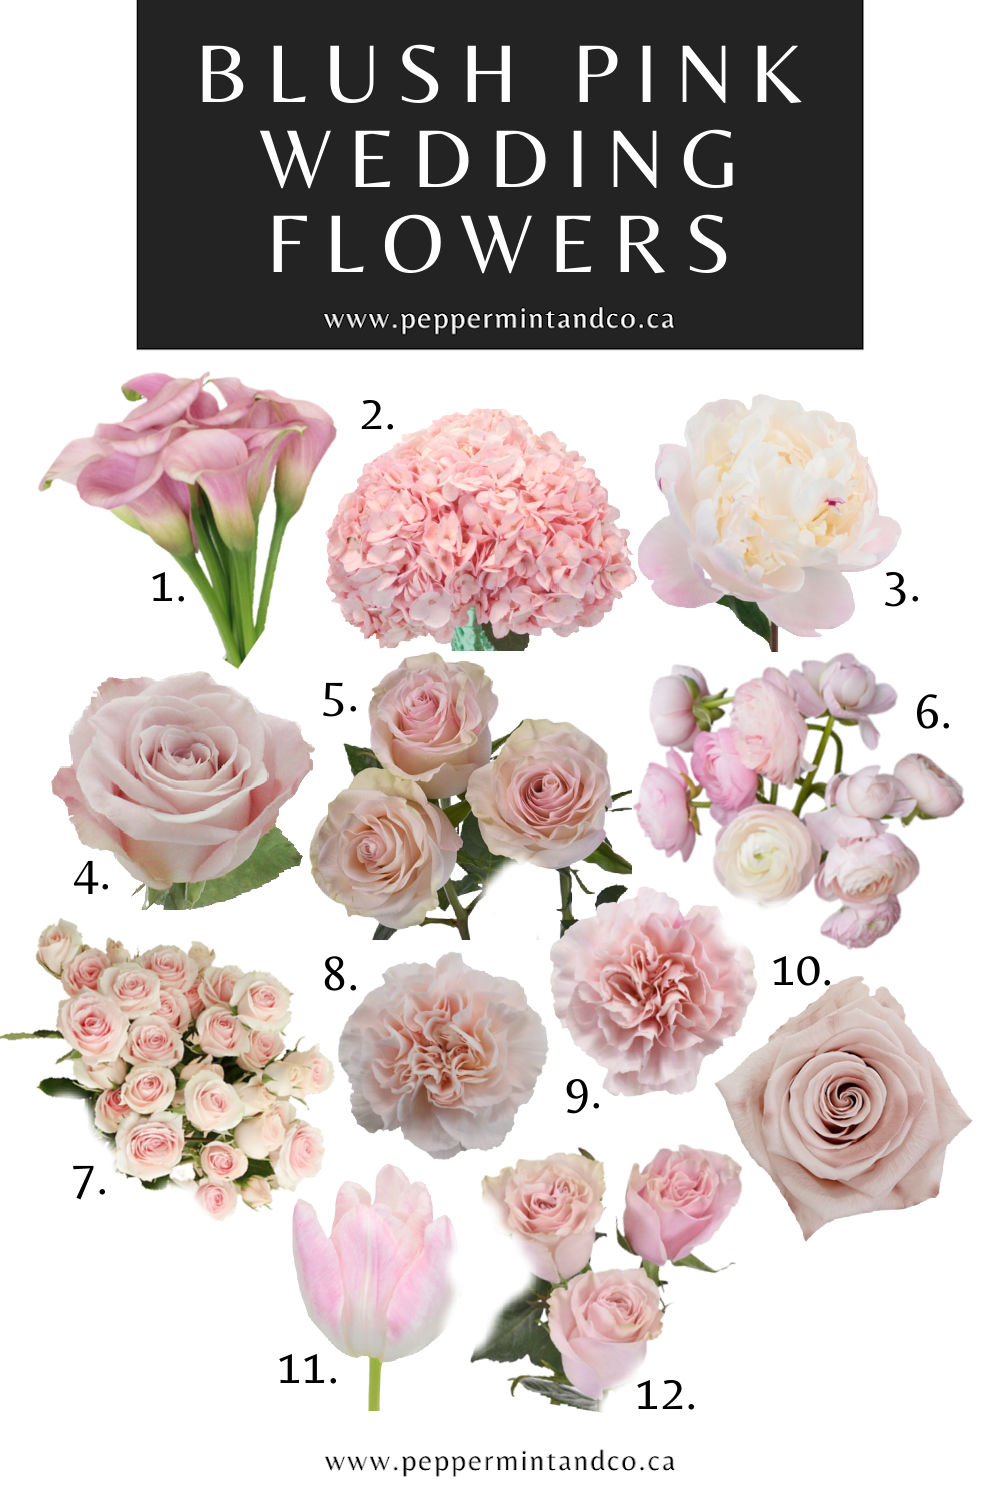 Blush Pink Wedding Flowers: DIY Bouquet & Centerpieces